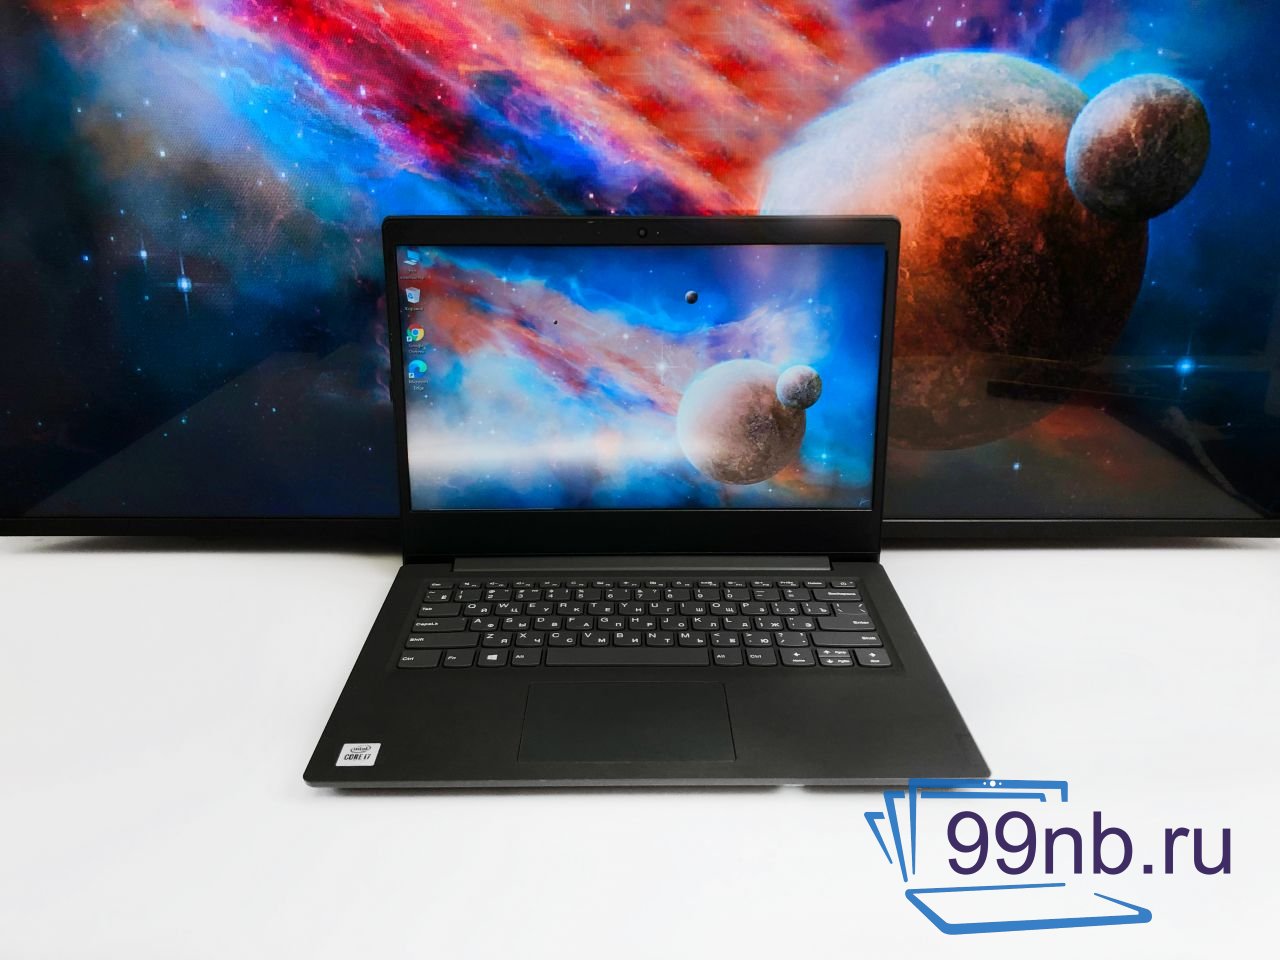  Мощный ноутбук Lenovo на i7/256 Gb SSD